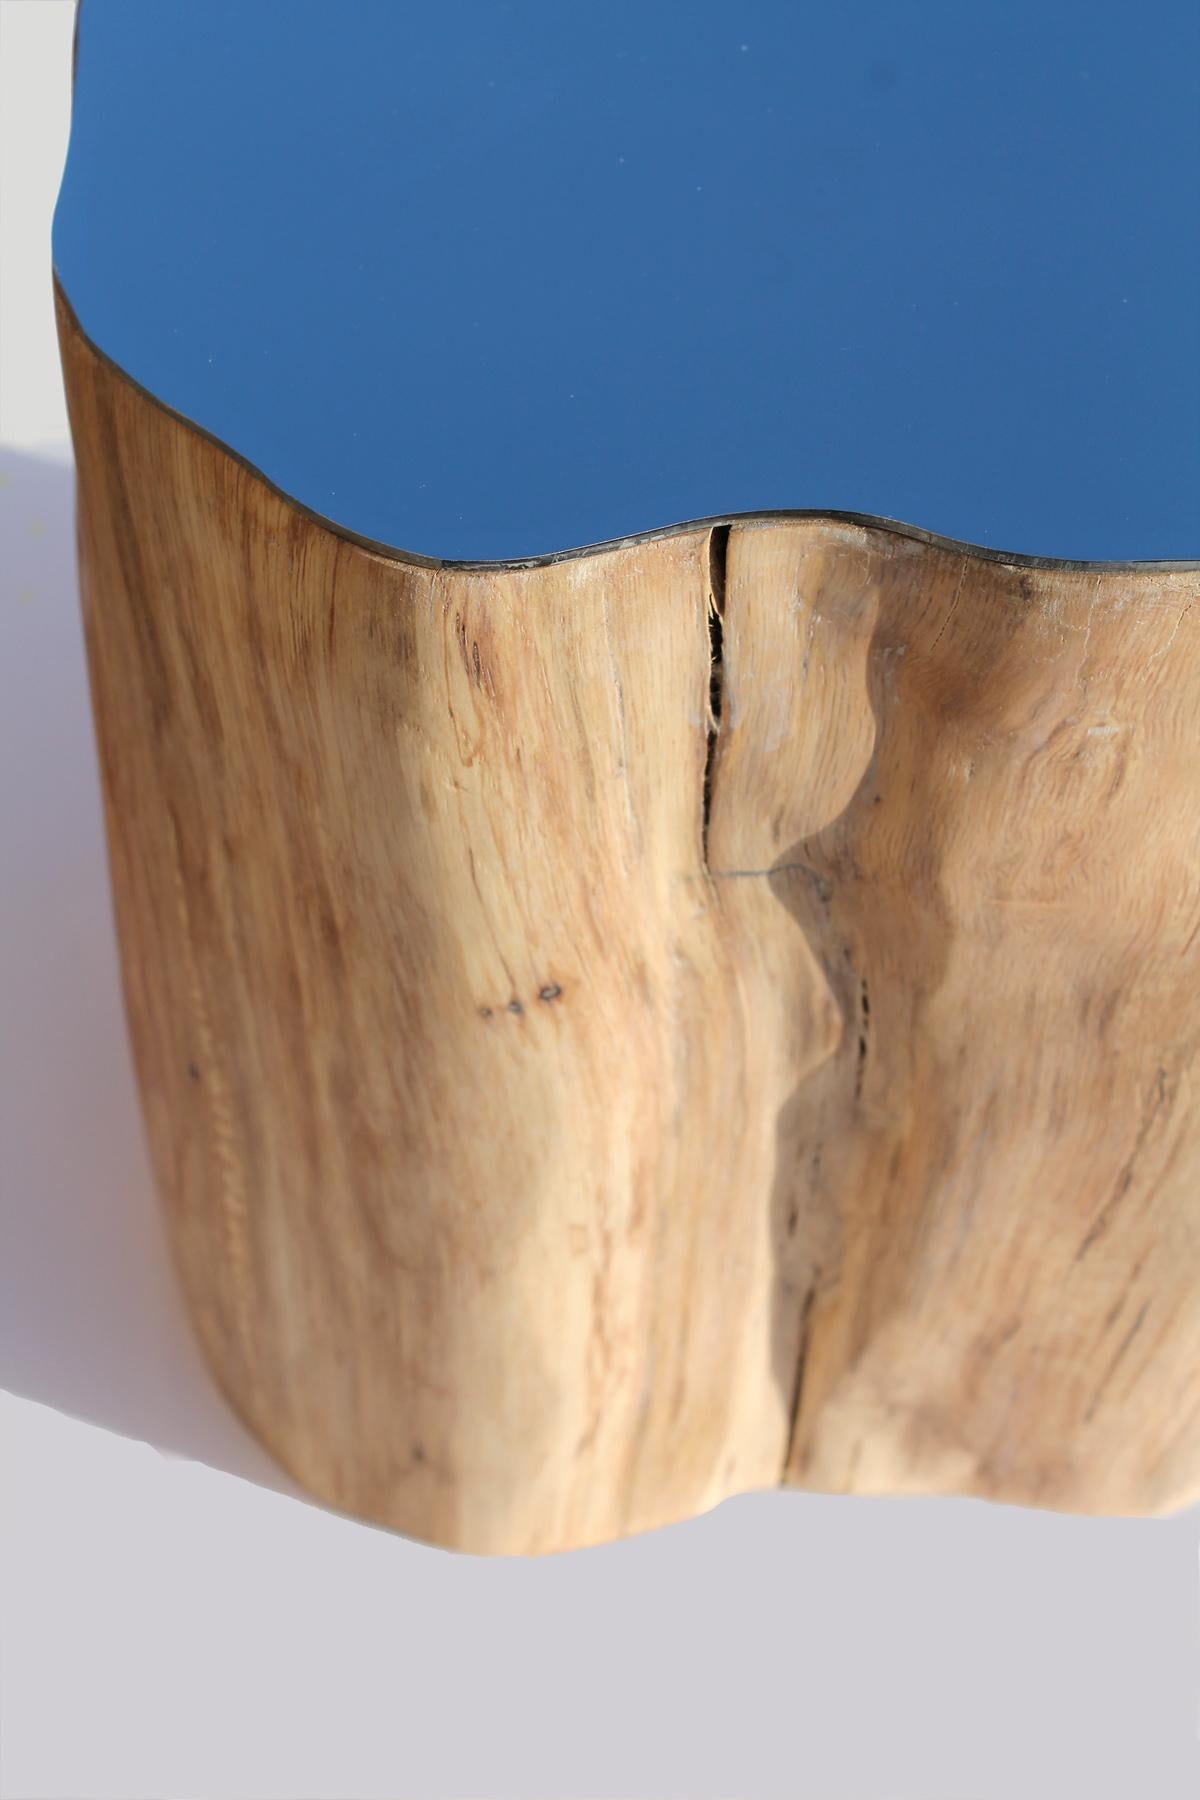 Mirrored Oak Log (10): Sculptural floor installation piece by Lee Borthwick 2